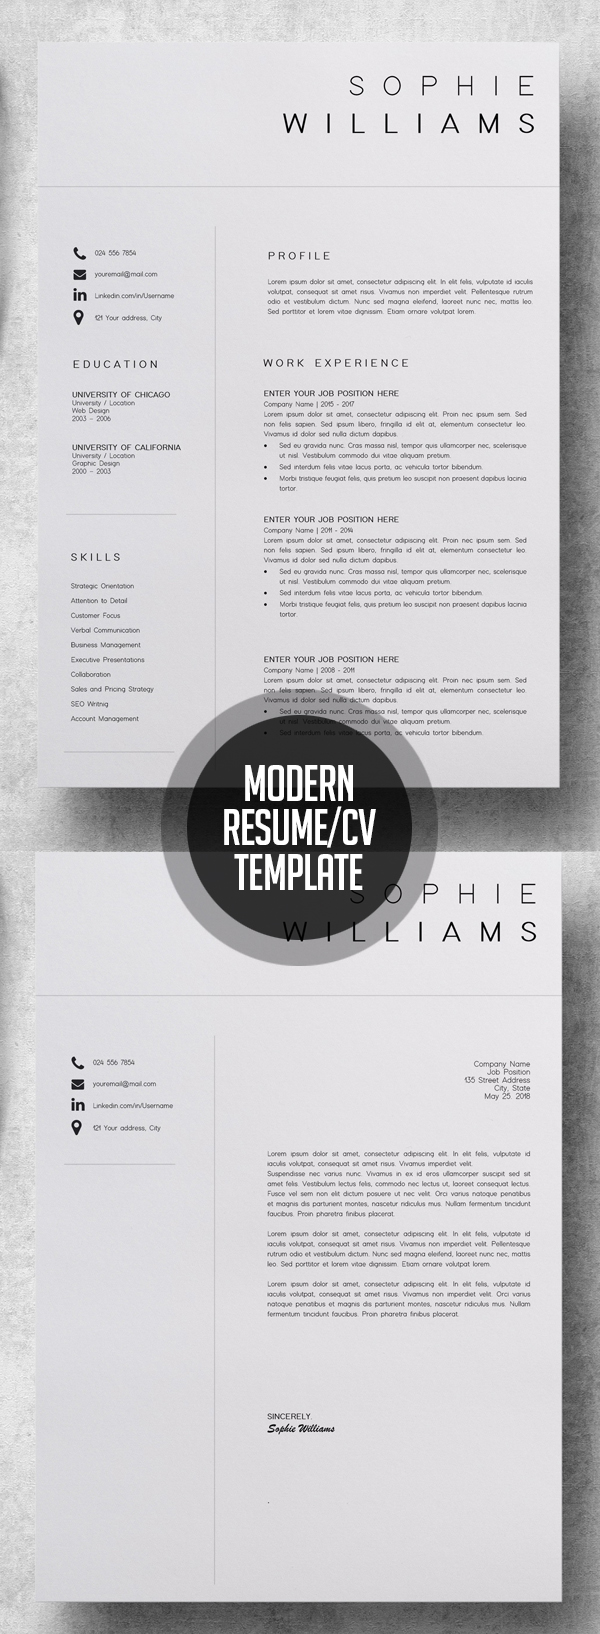 Modern Resume Template and CV Template #resumedesign